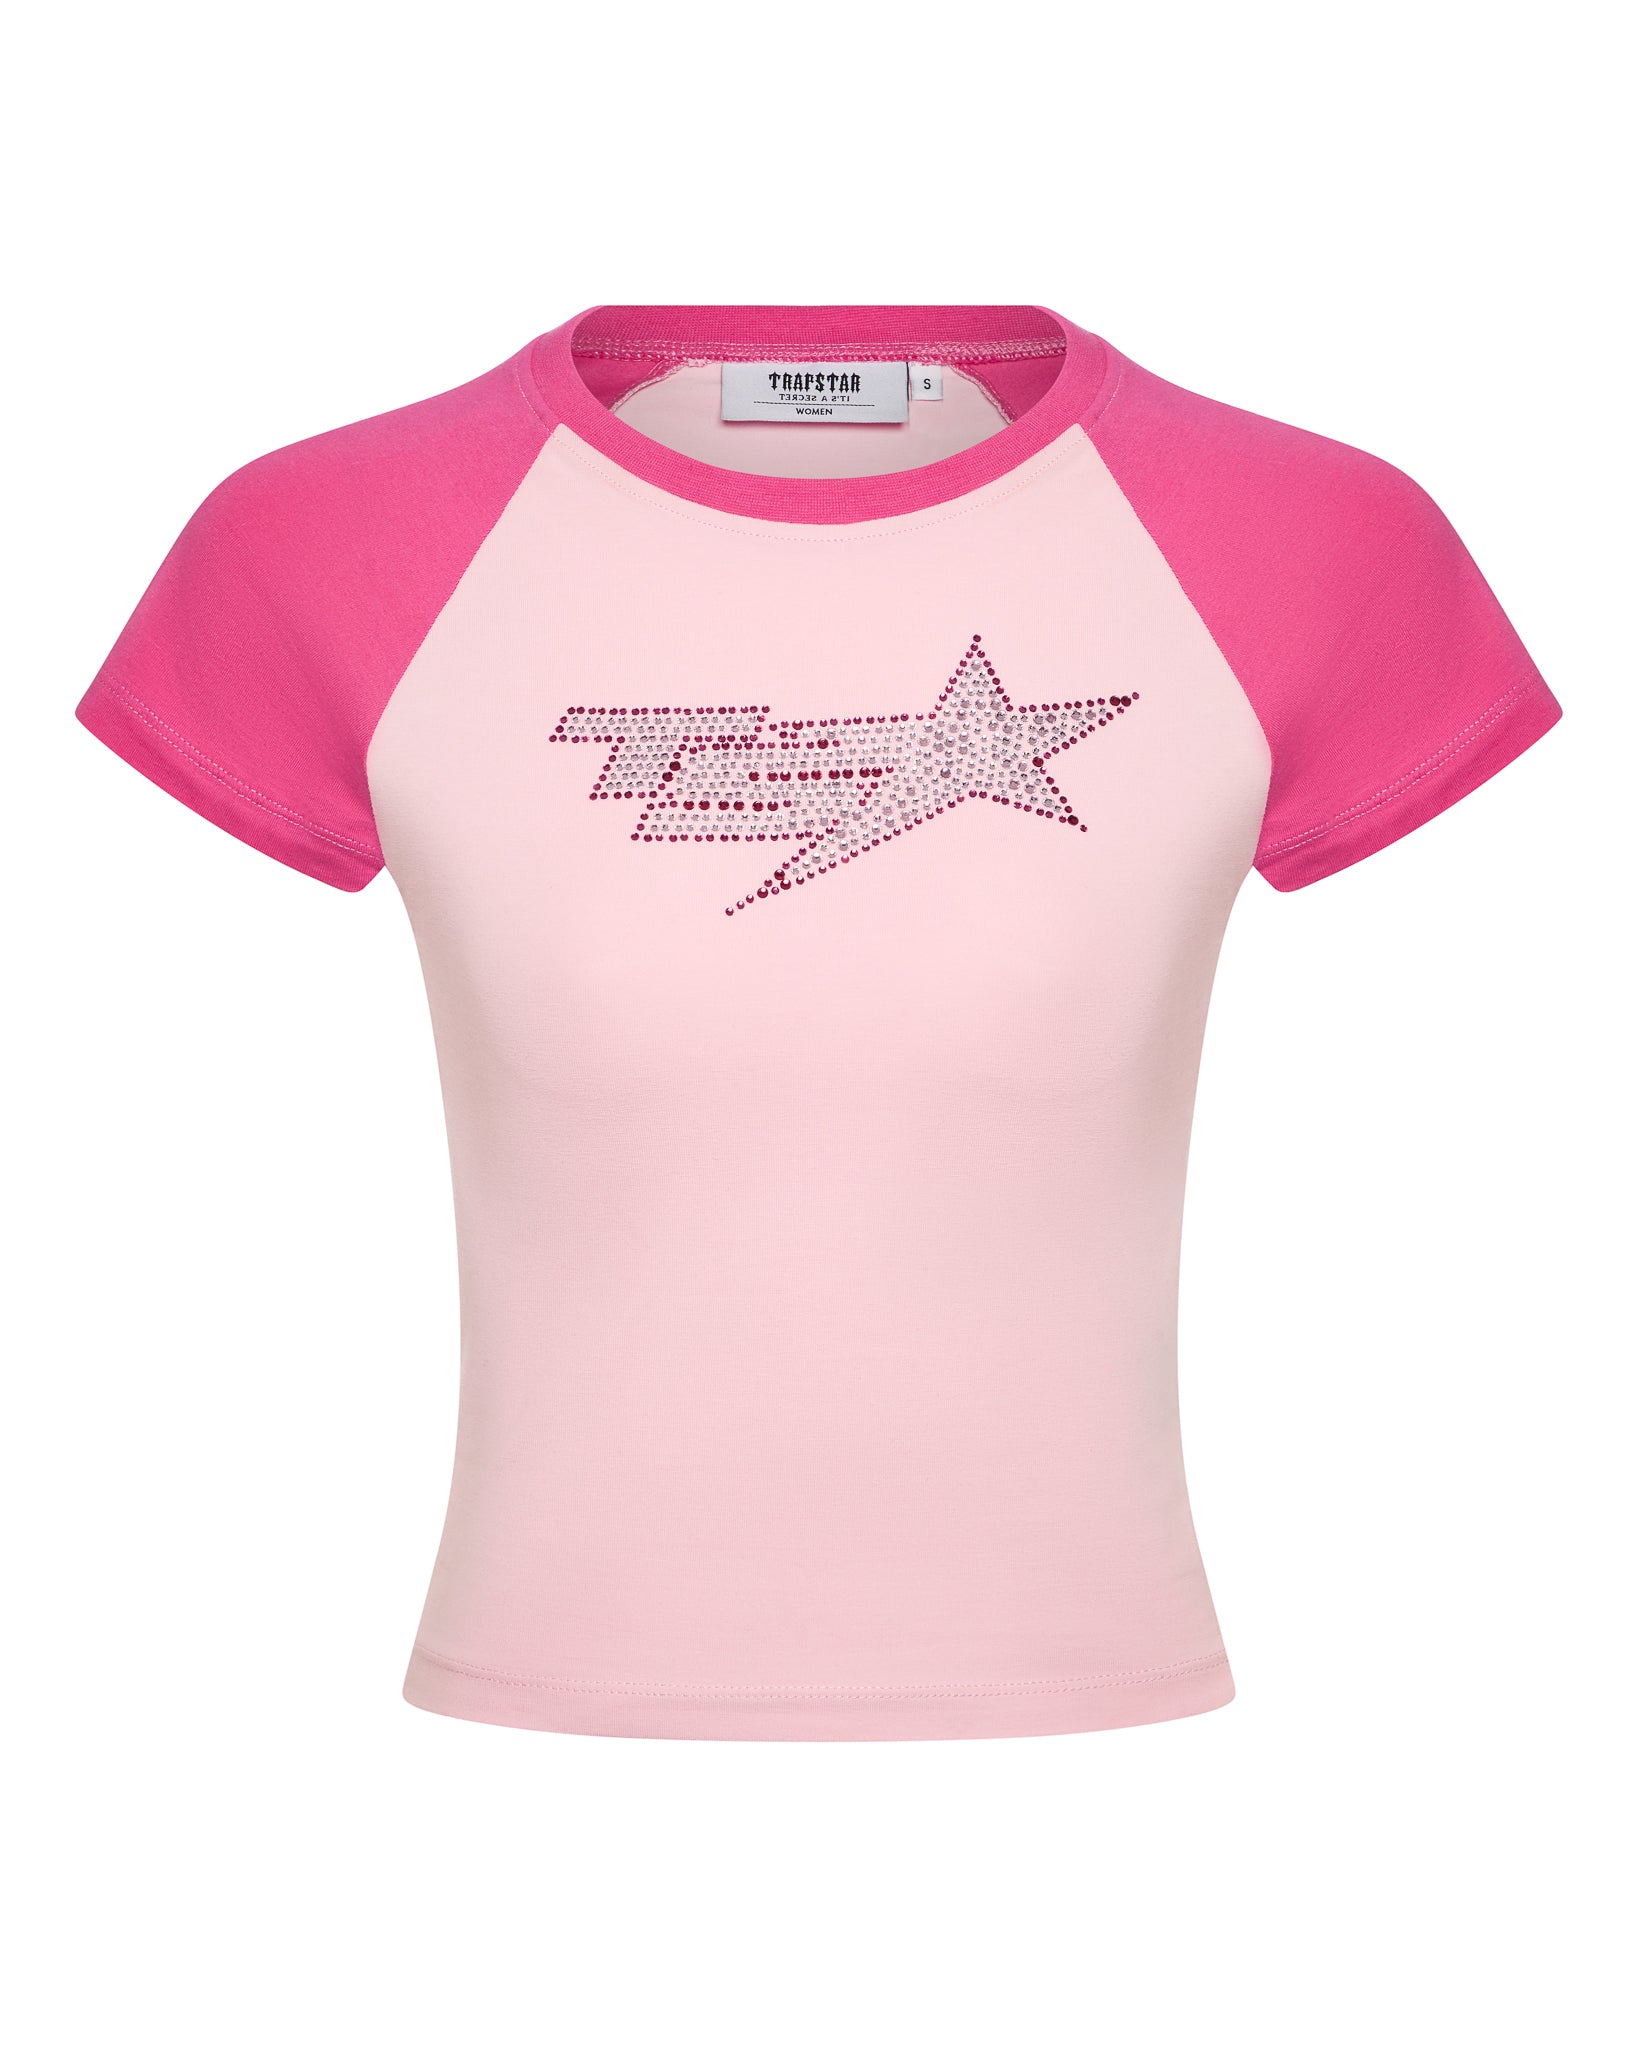 Women's TS Star Raglan Baby Tee - Pink